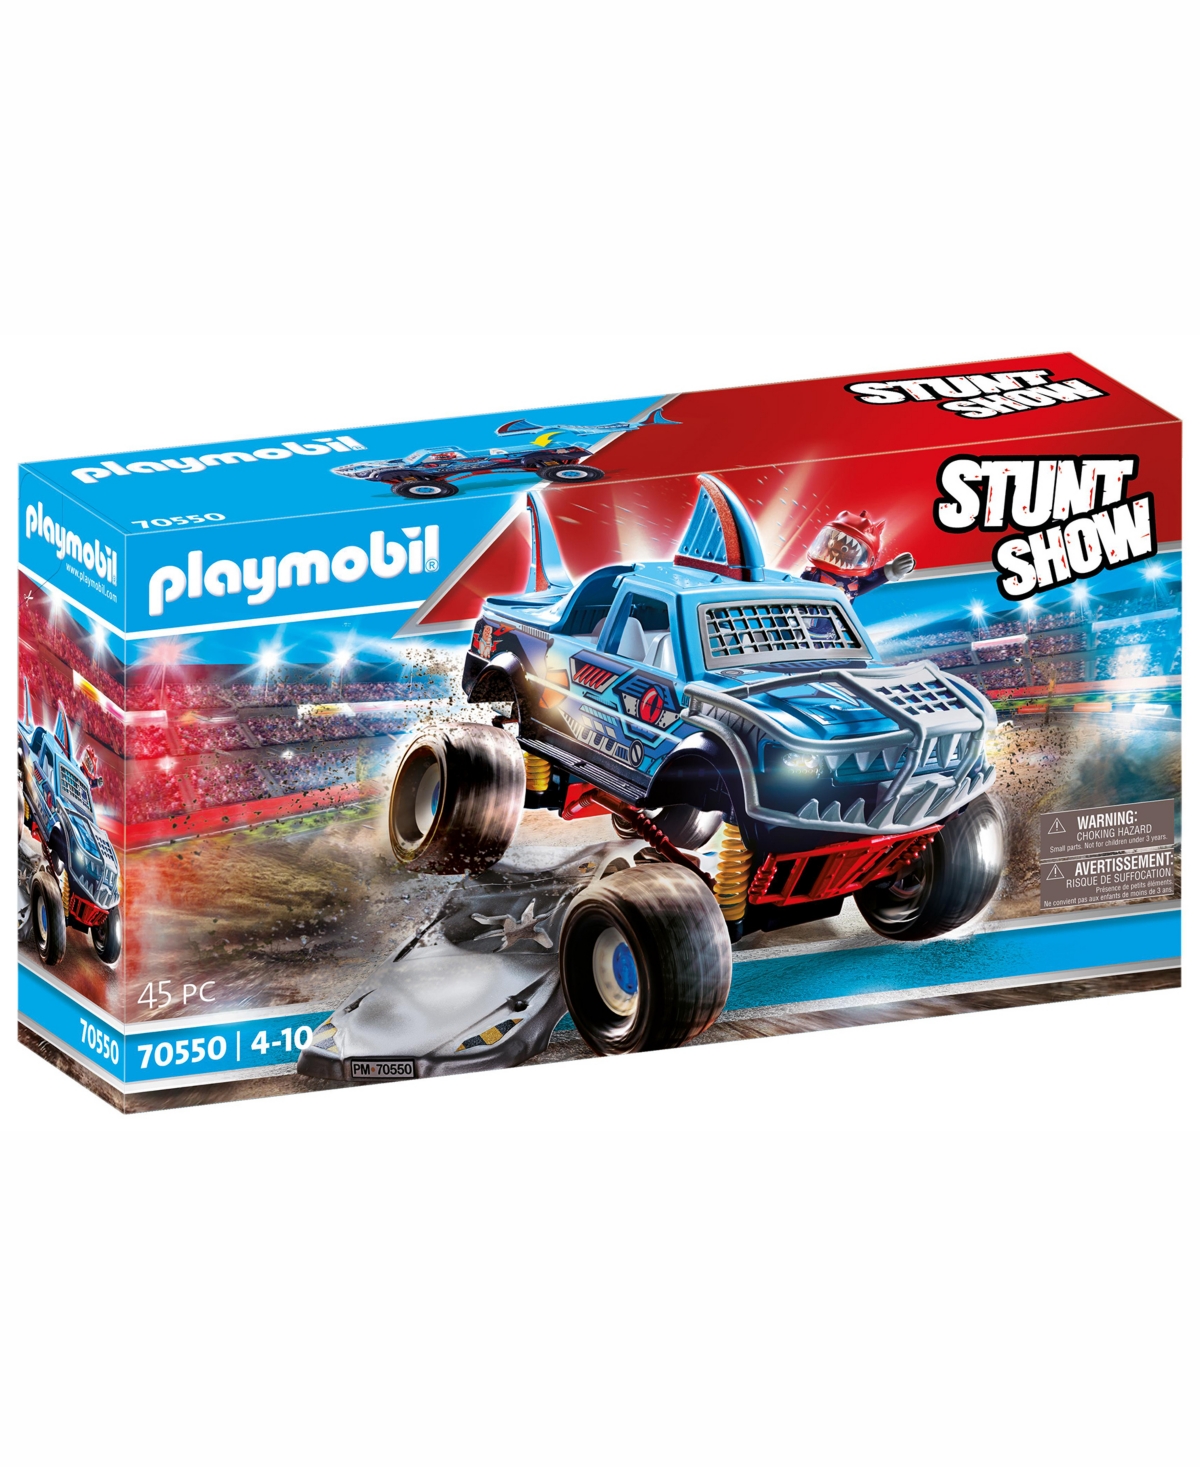 Playmobil Stunt Show Shark Monster Truck In No Color